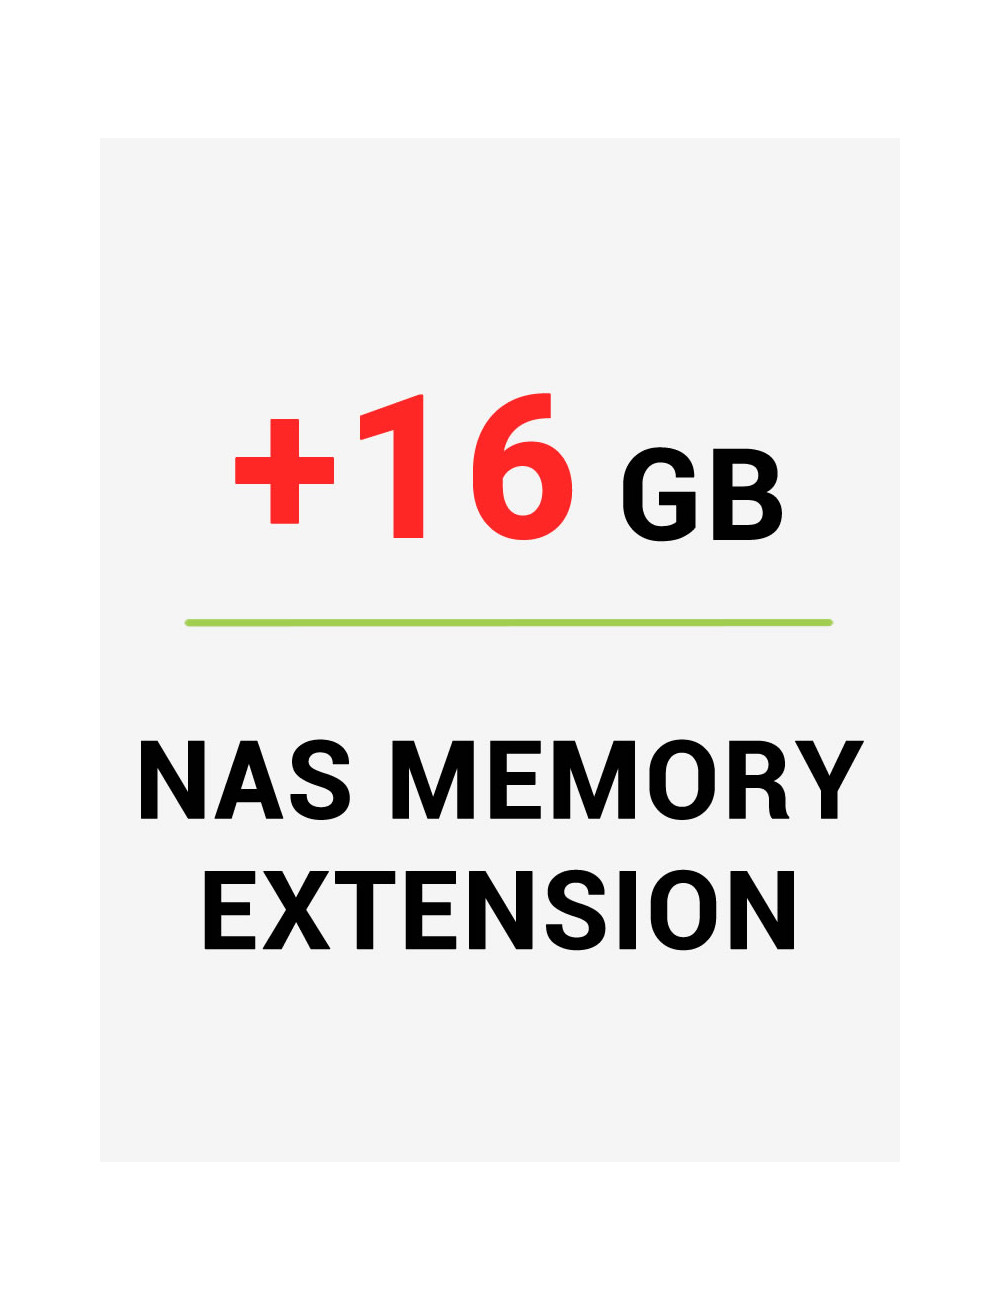 SYNOLOGY Memory expansion 16GB DDR4 ECC Unbuffered DIMM